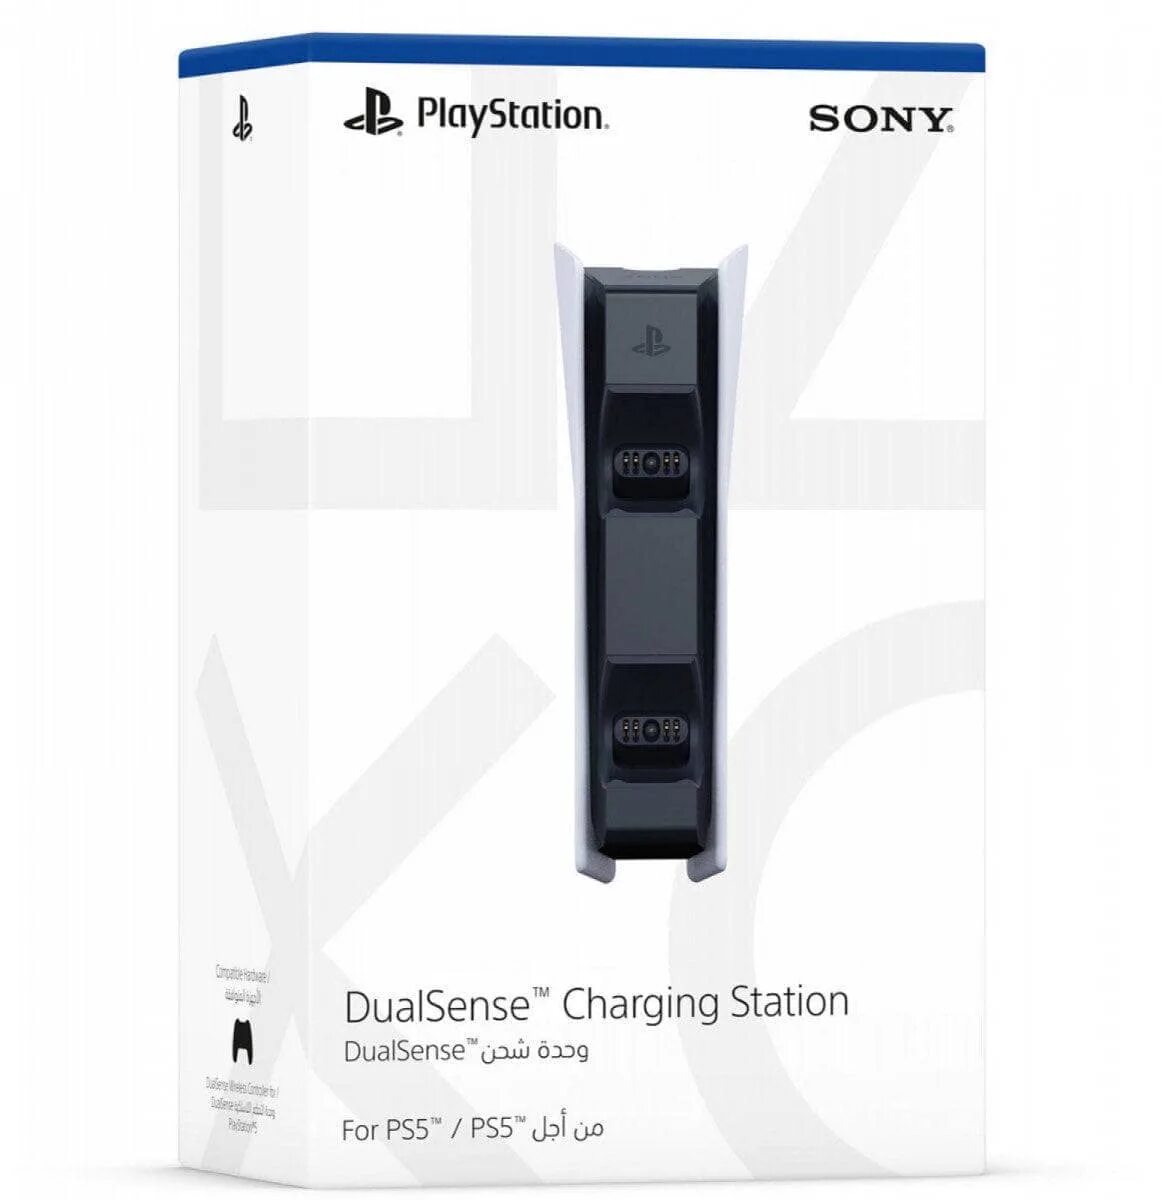 Станция dualsenses ps5. Зарядная станция Sony Dualsense ps5. Зарядная станция Dualsense для ps5 (Dualsense Charging Station). Зарядка для Dualsense ps5. Зарядная станция Sony PS 5 Dualsense Charging Station (CFI-zds1).